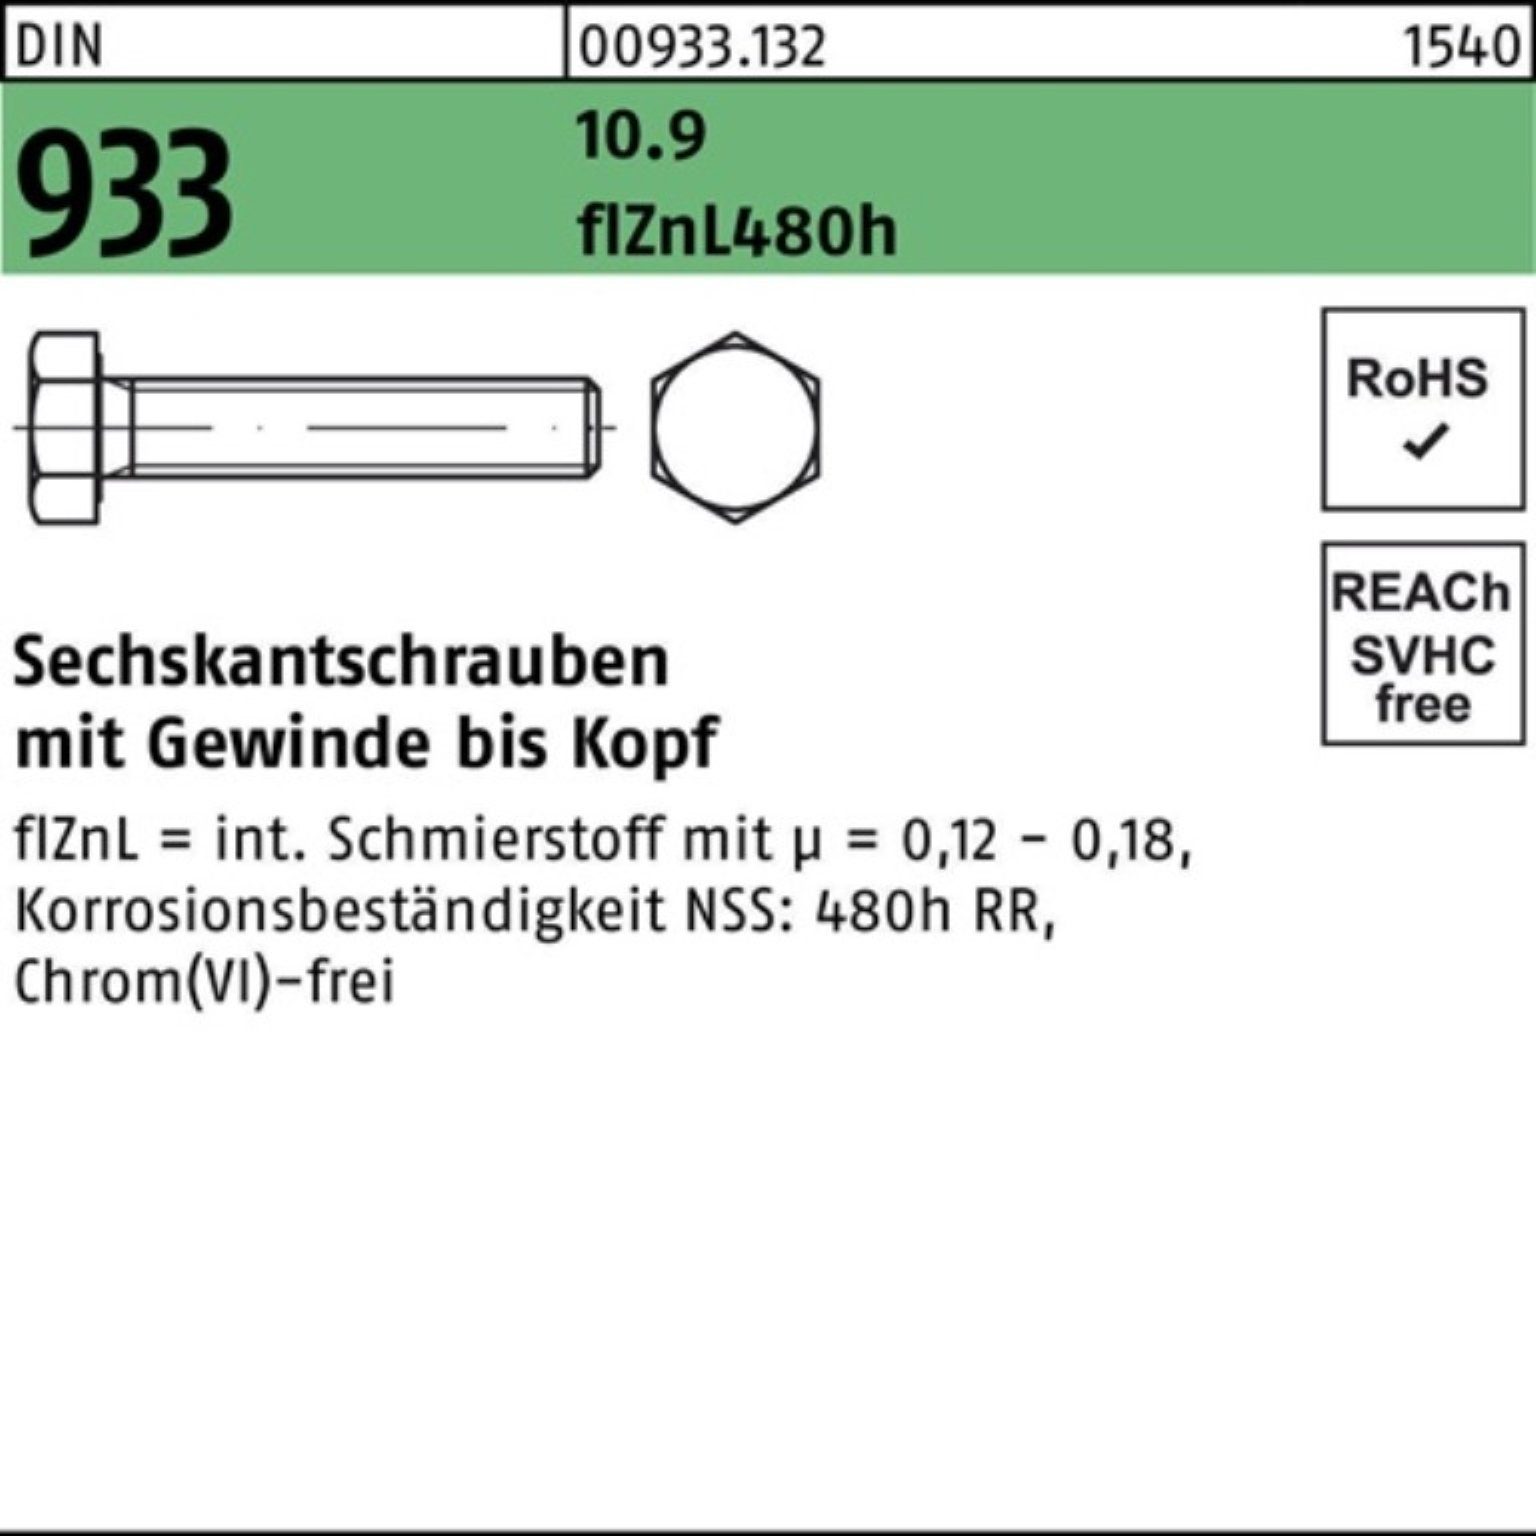 Pack Reyher 40 933 M6x DIN Sechskantschraube 10.9 Sechskantschraube 200er VG flZnL/nc/x/x/480h